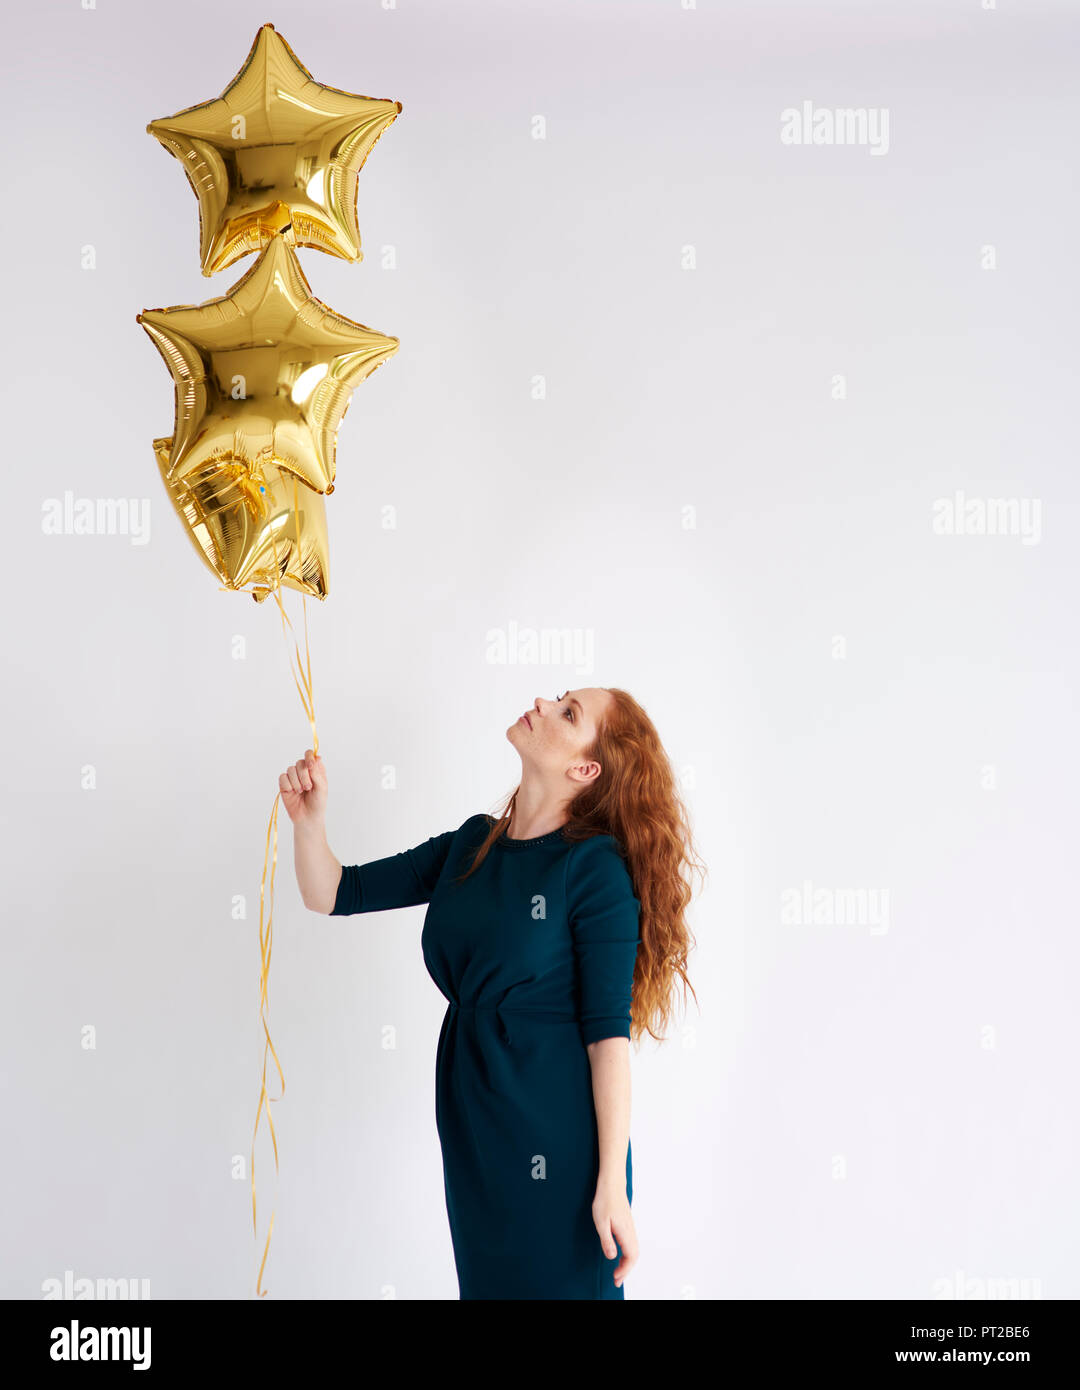 Junge Frau mit drei golden star-förmige Ballons Stockfoto